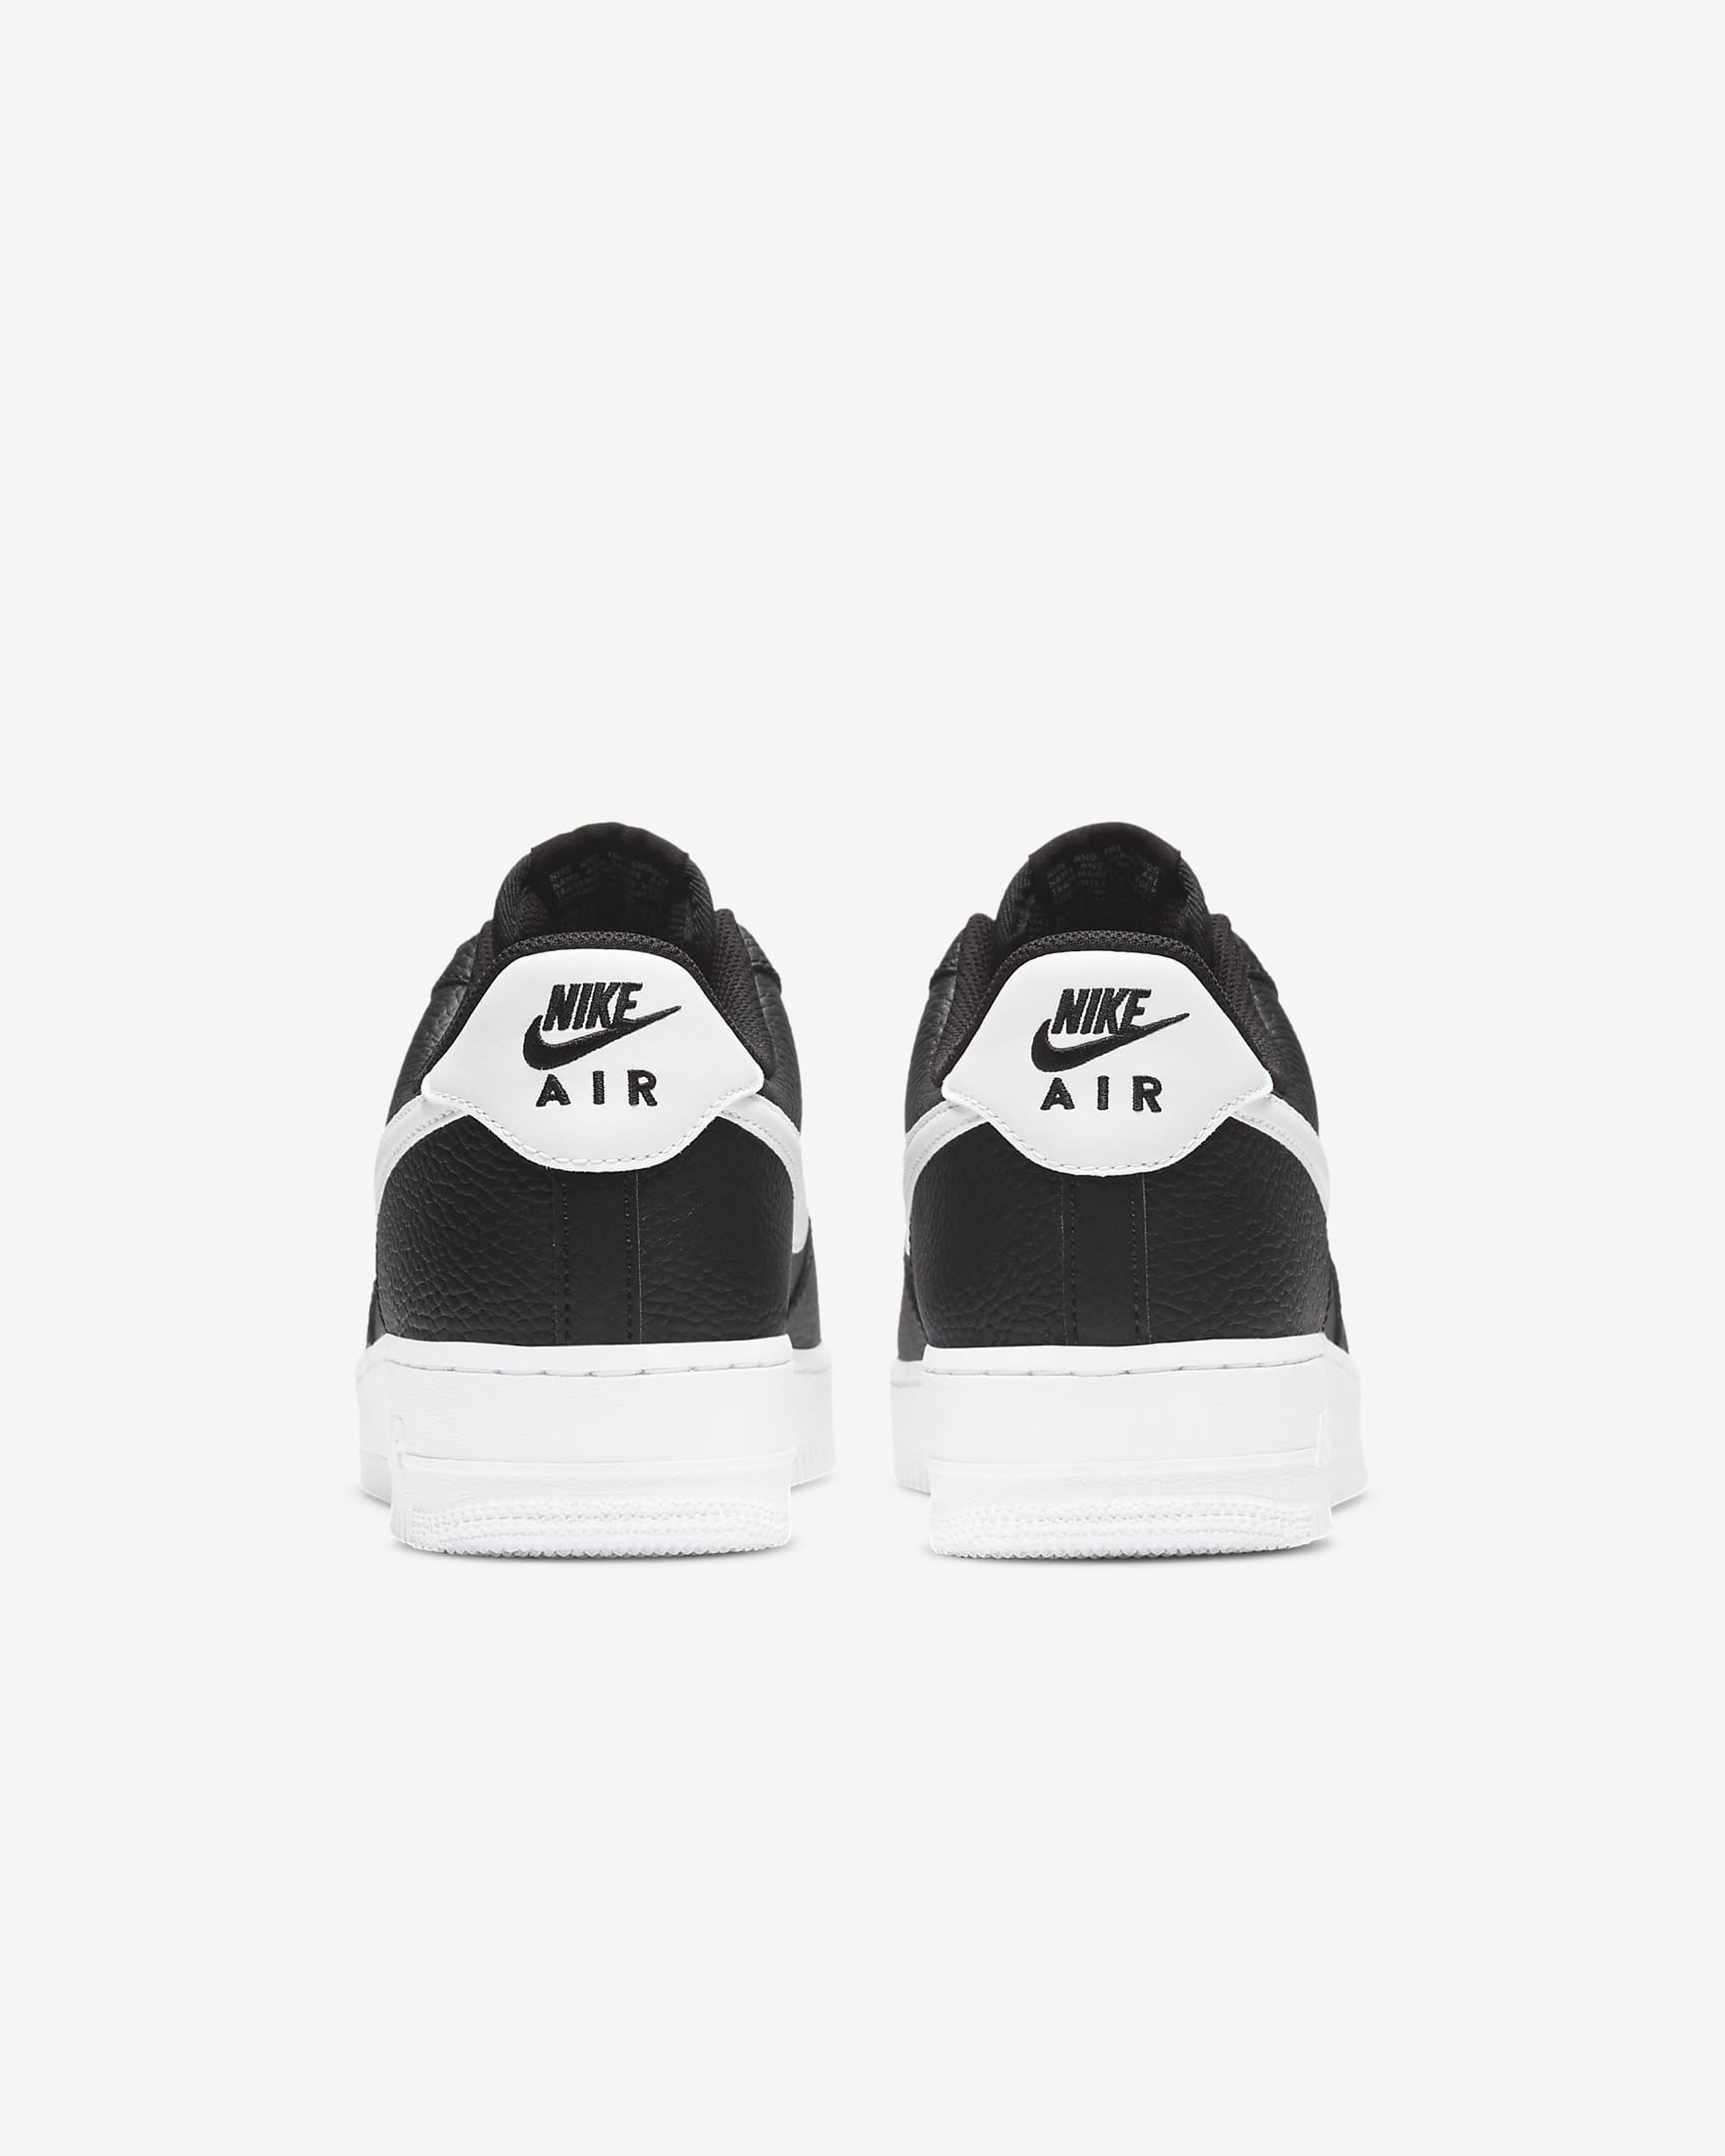 Chaussure Nike Air Force 1 ‘07 pour Homme - Noir/Blanc